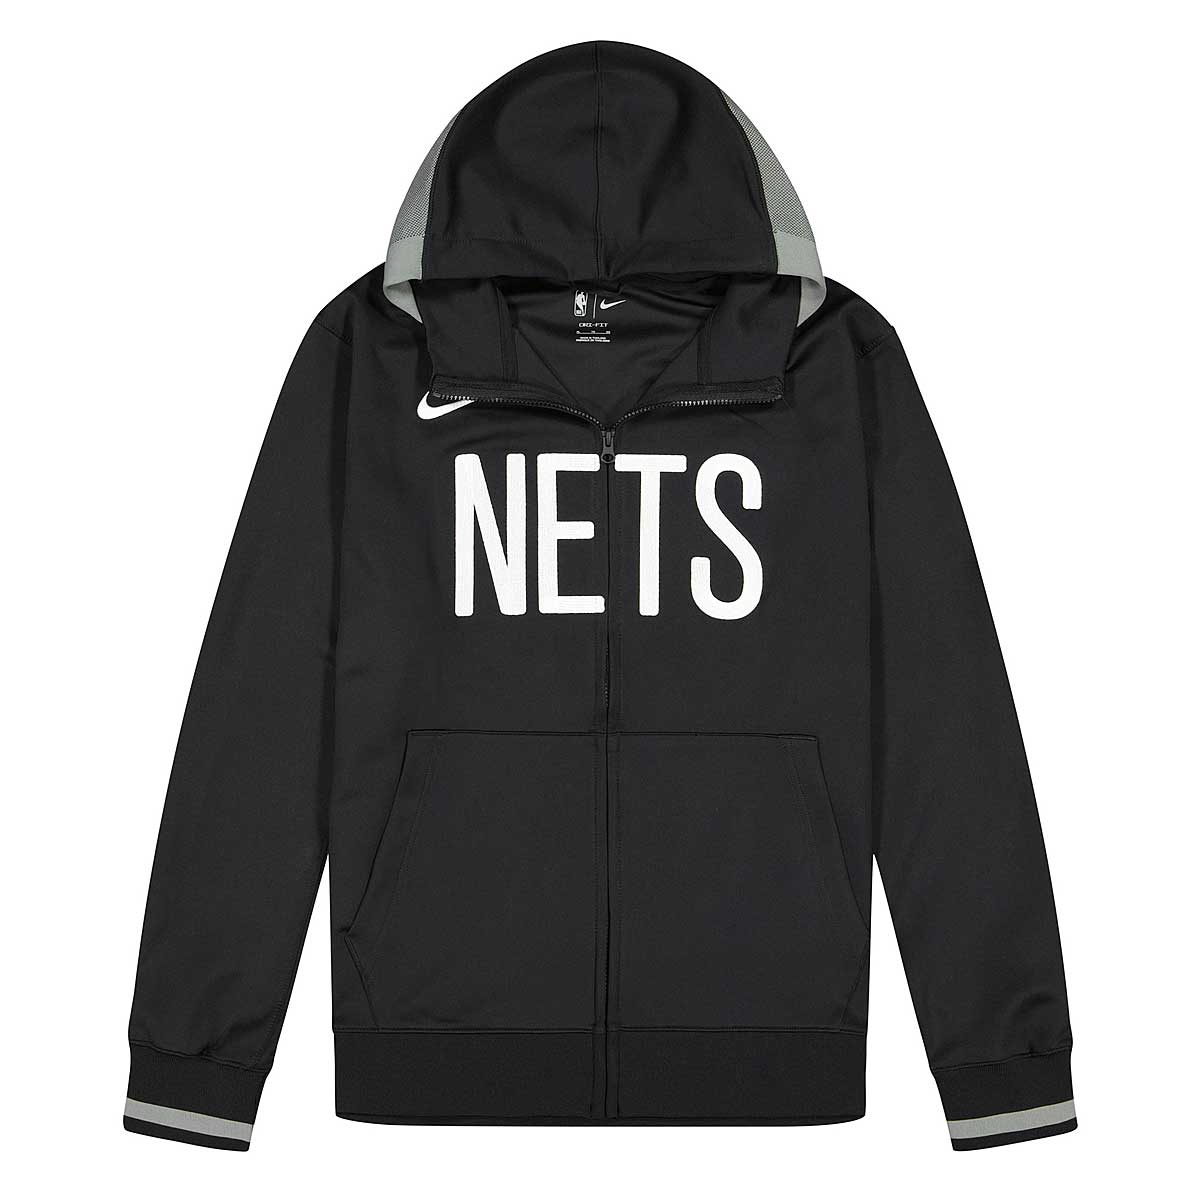 Nike NBA Brooklyn Nets Dri-fit Showtime Full Zip Hoody Hoody, Schwarz/dark Steel Grey/schwarz/weiß S